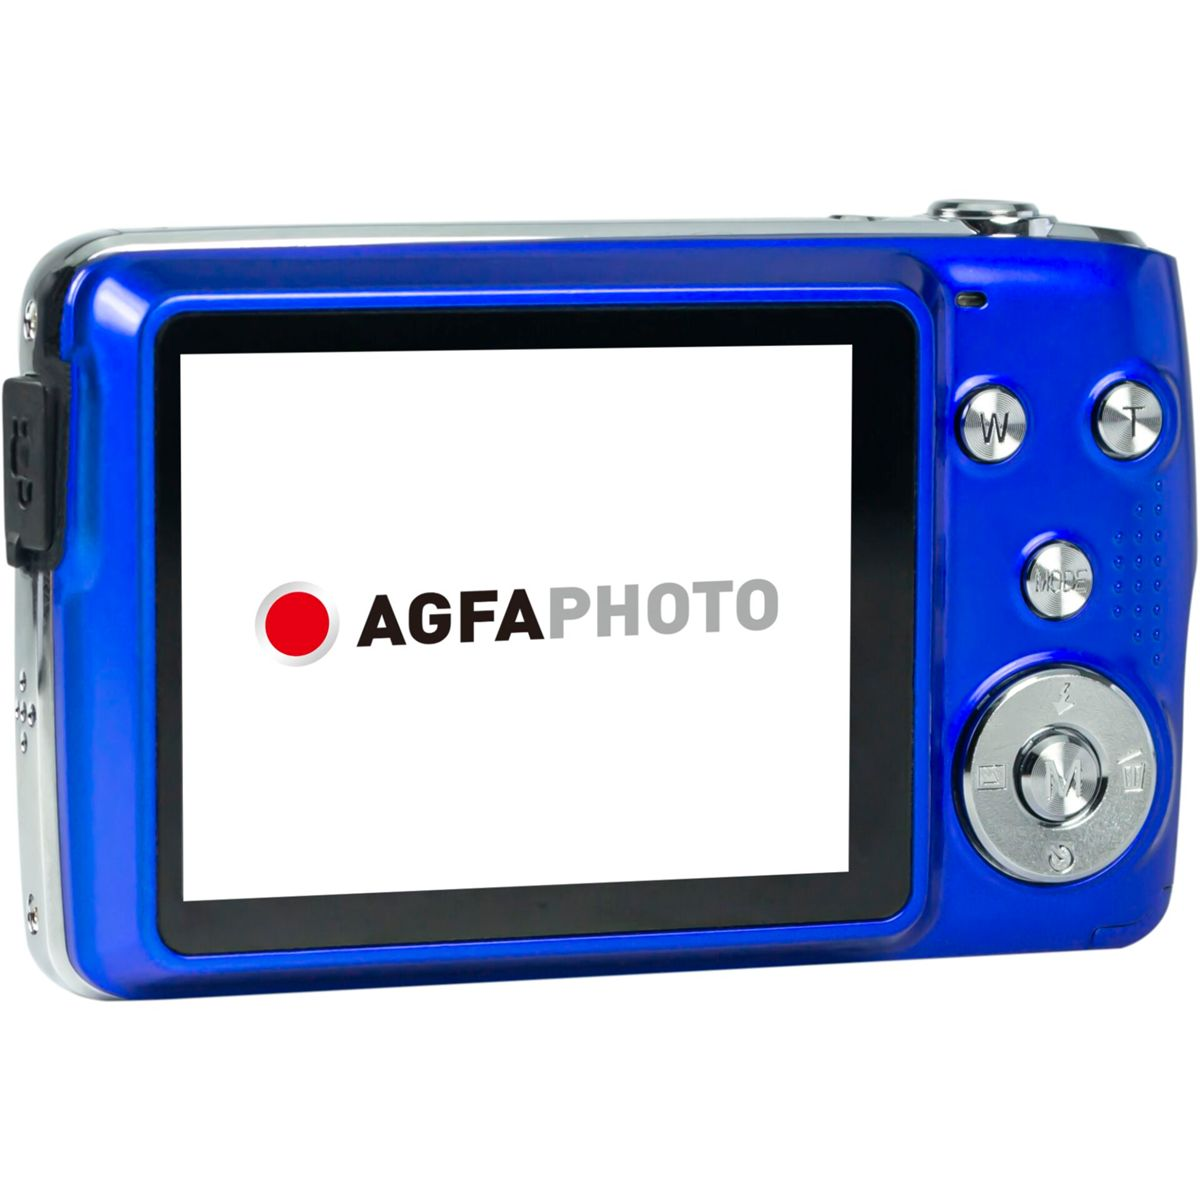 AGFAPHOTO Realishot DC8200 x blau mit LCD-Backlight TFT- 8 blau, LCD Zoom, opt. Digitalkamera